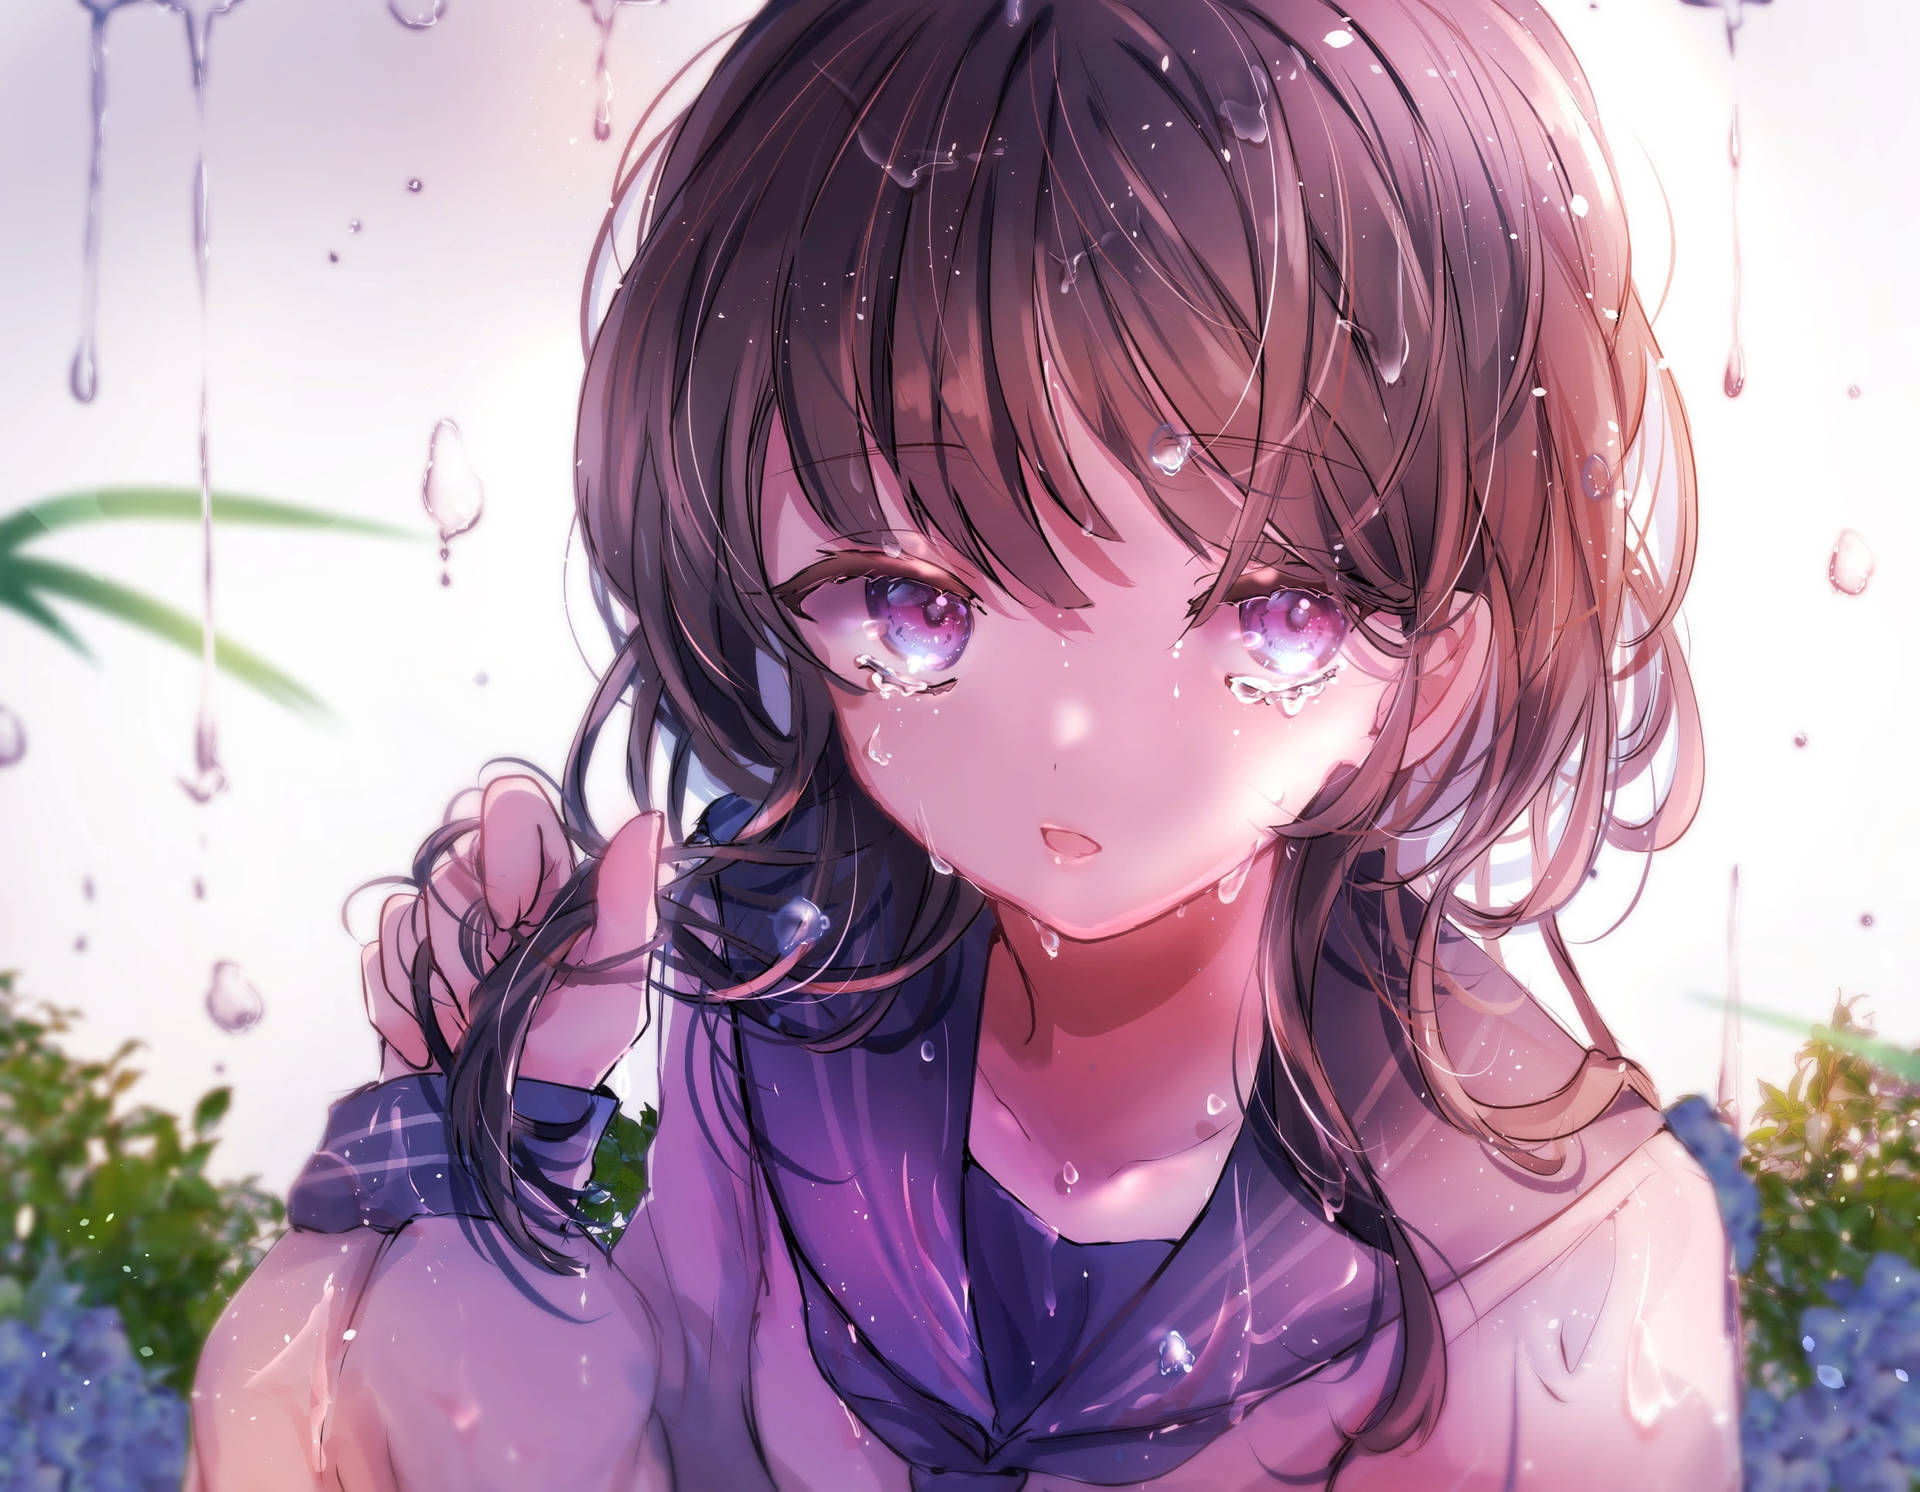 Free Sad Aesthetic Anime Girl Wallpaper Downloads, [100+] Sad Aesthetic  Anime Girl Wallpapers for FREE 